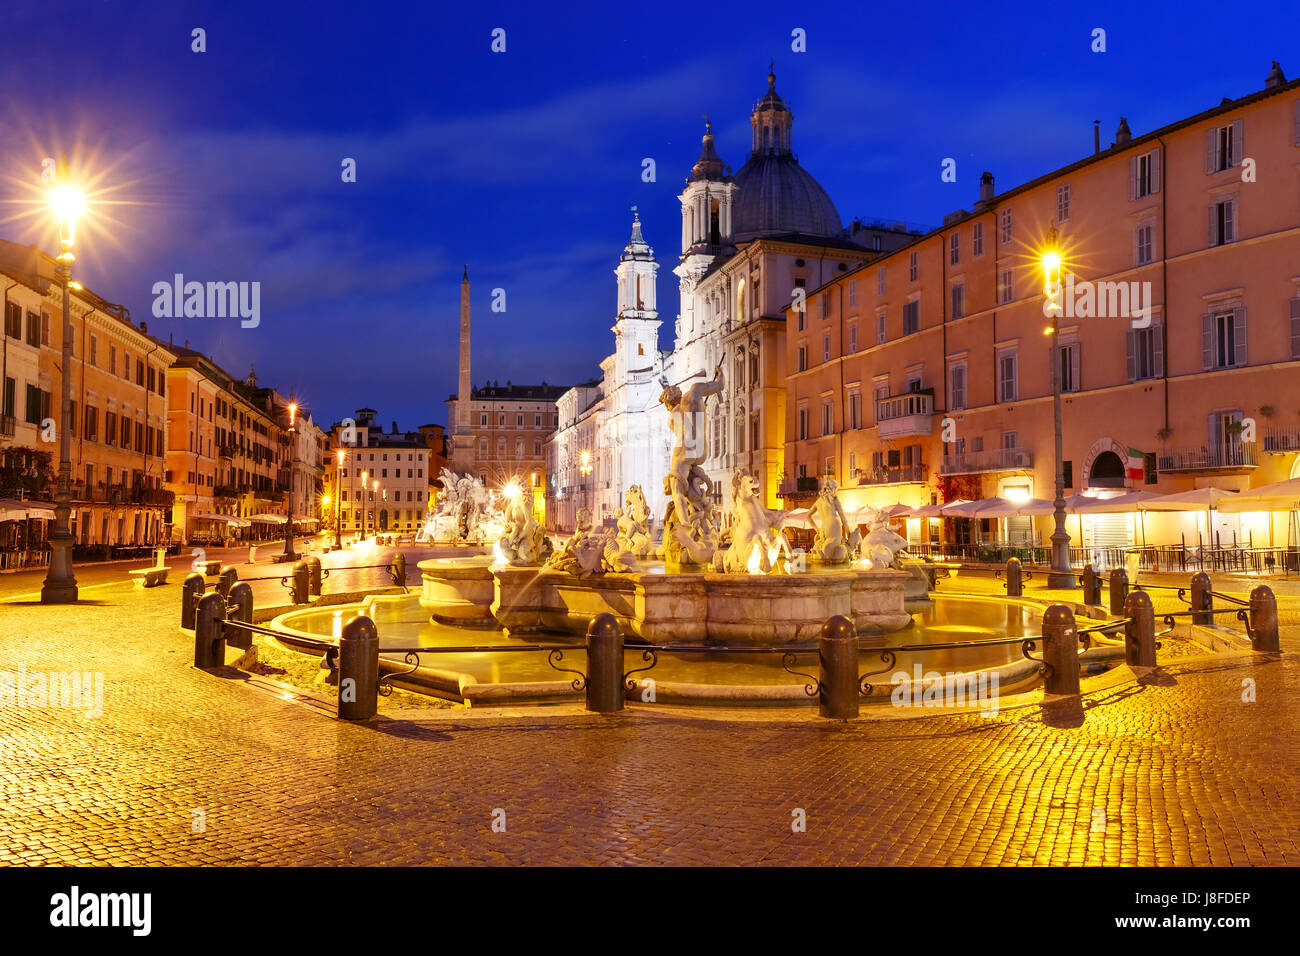 Piazza Navona Square at night, Rome, Italy. Stock Photo